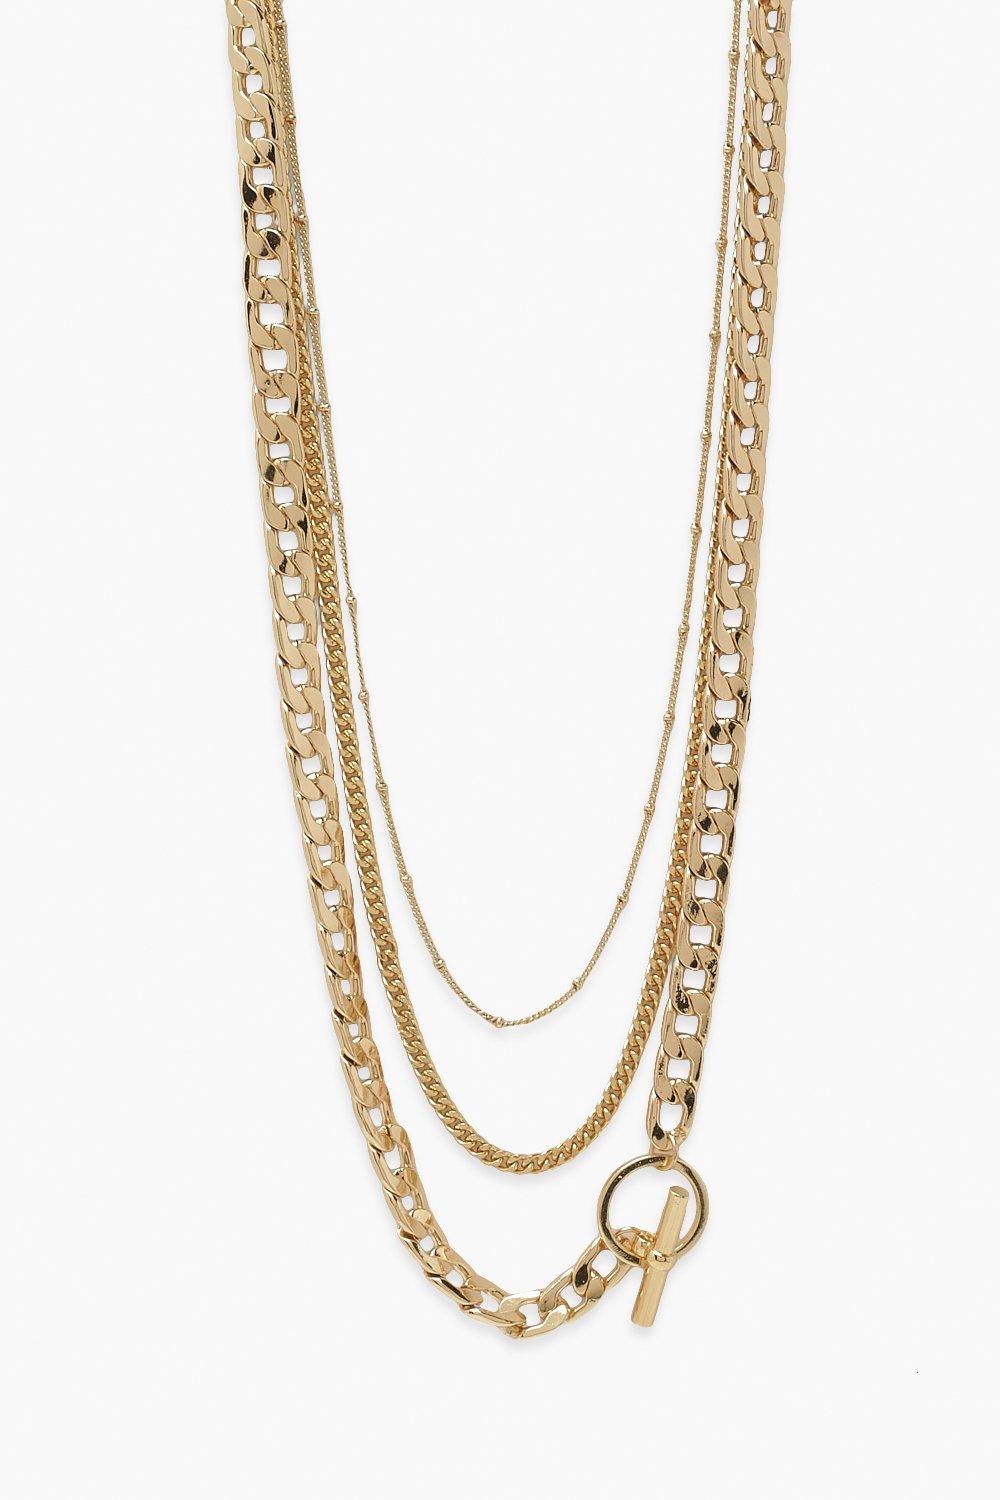 Sale Jewellery Chunky Chain Toggle Clasps Chain Pack